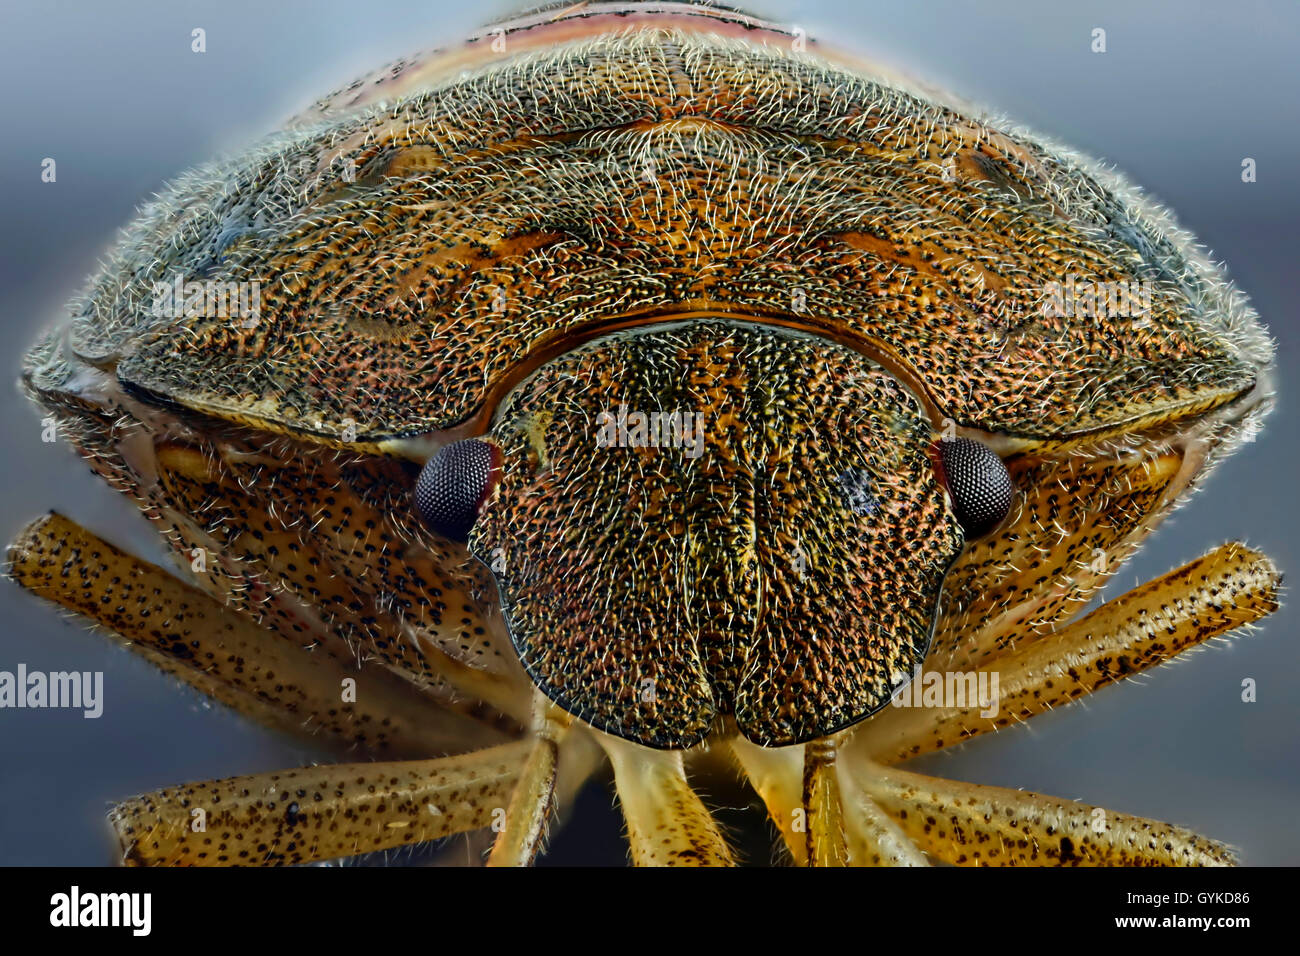 Wanzen (Heteroptera, Hemiptera), Makroaufnahme des Kopfes einer braunen Wanze | heteropterans, true bugs (Heteroptera, Hemiptera Stock Photo